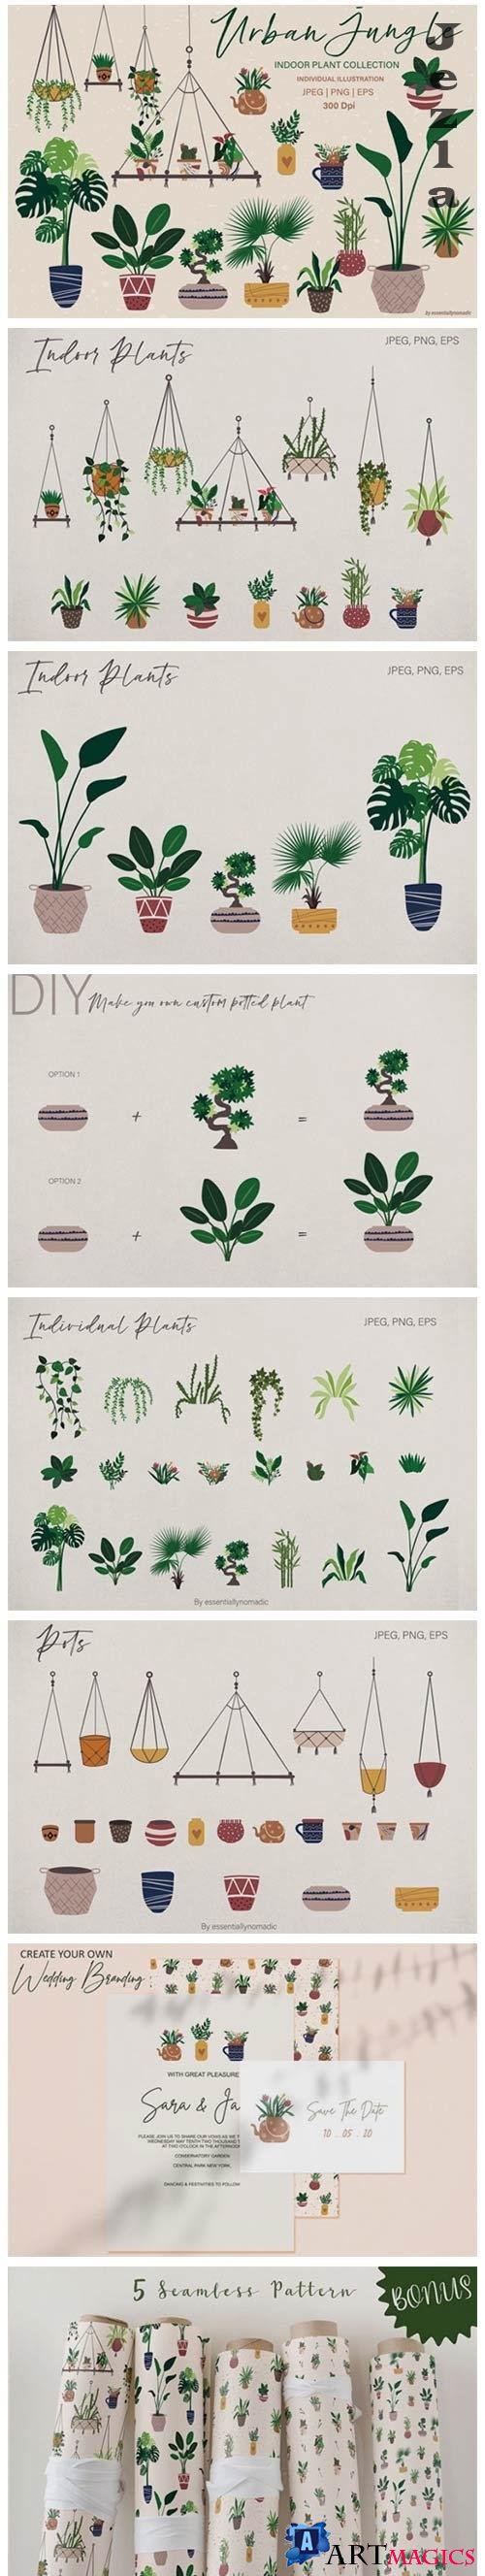 Hand Drawn Botanical Plant Illustration - 3967655